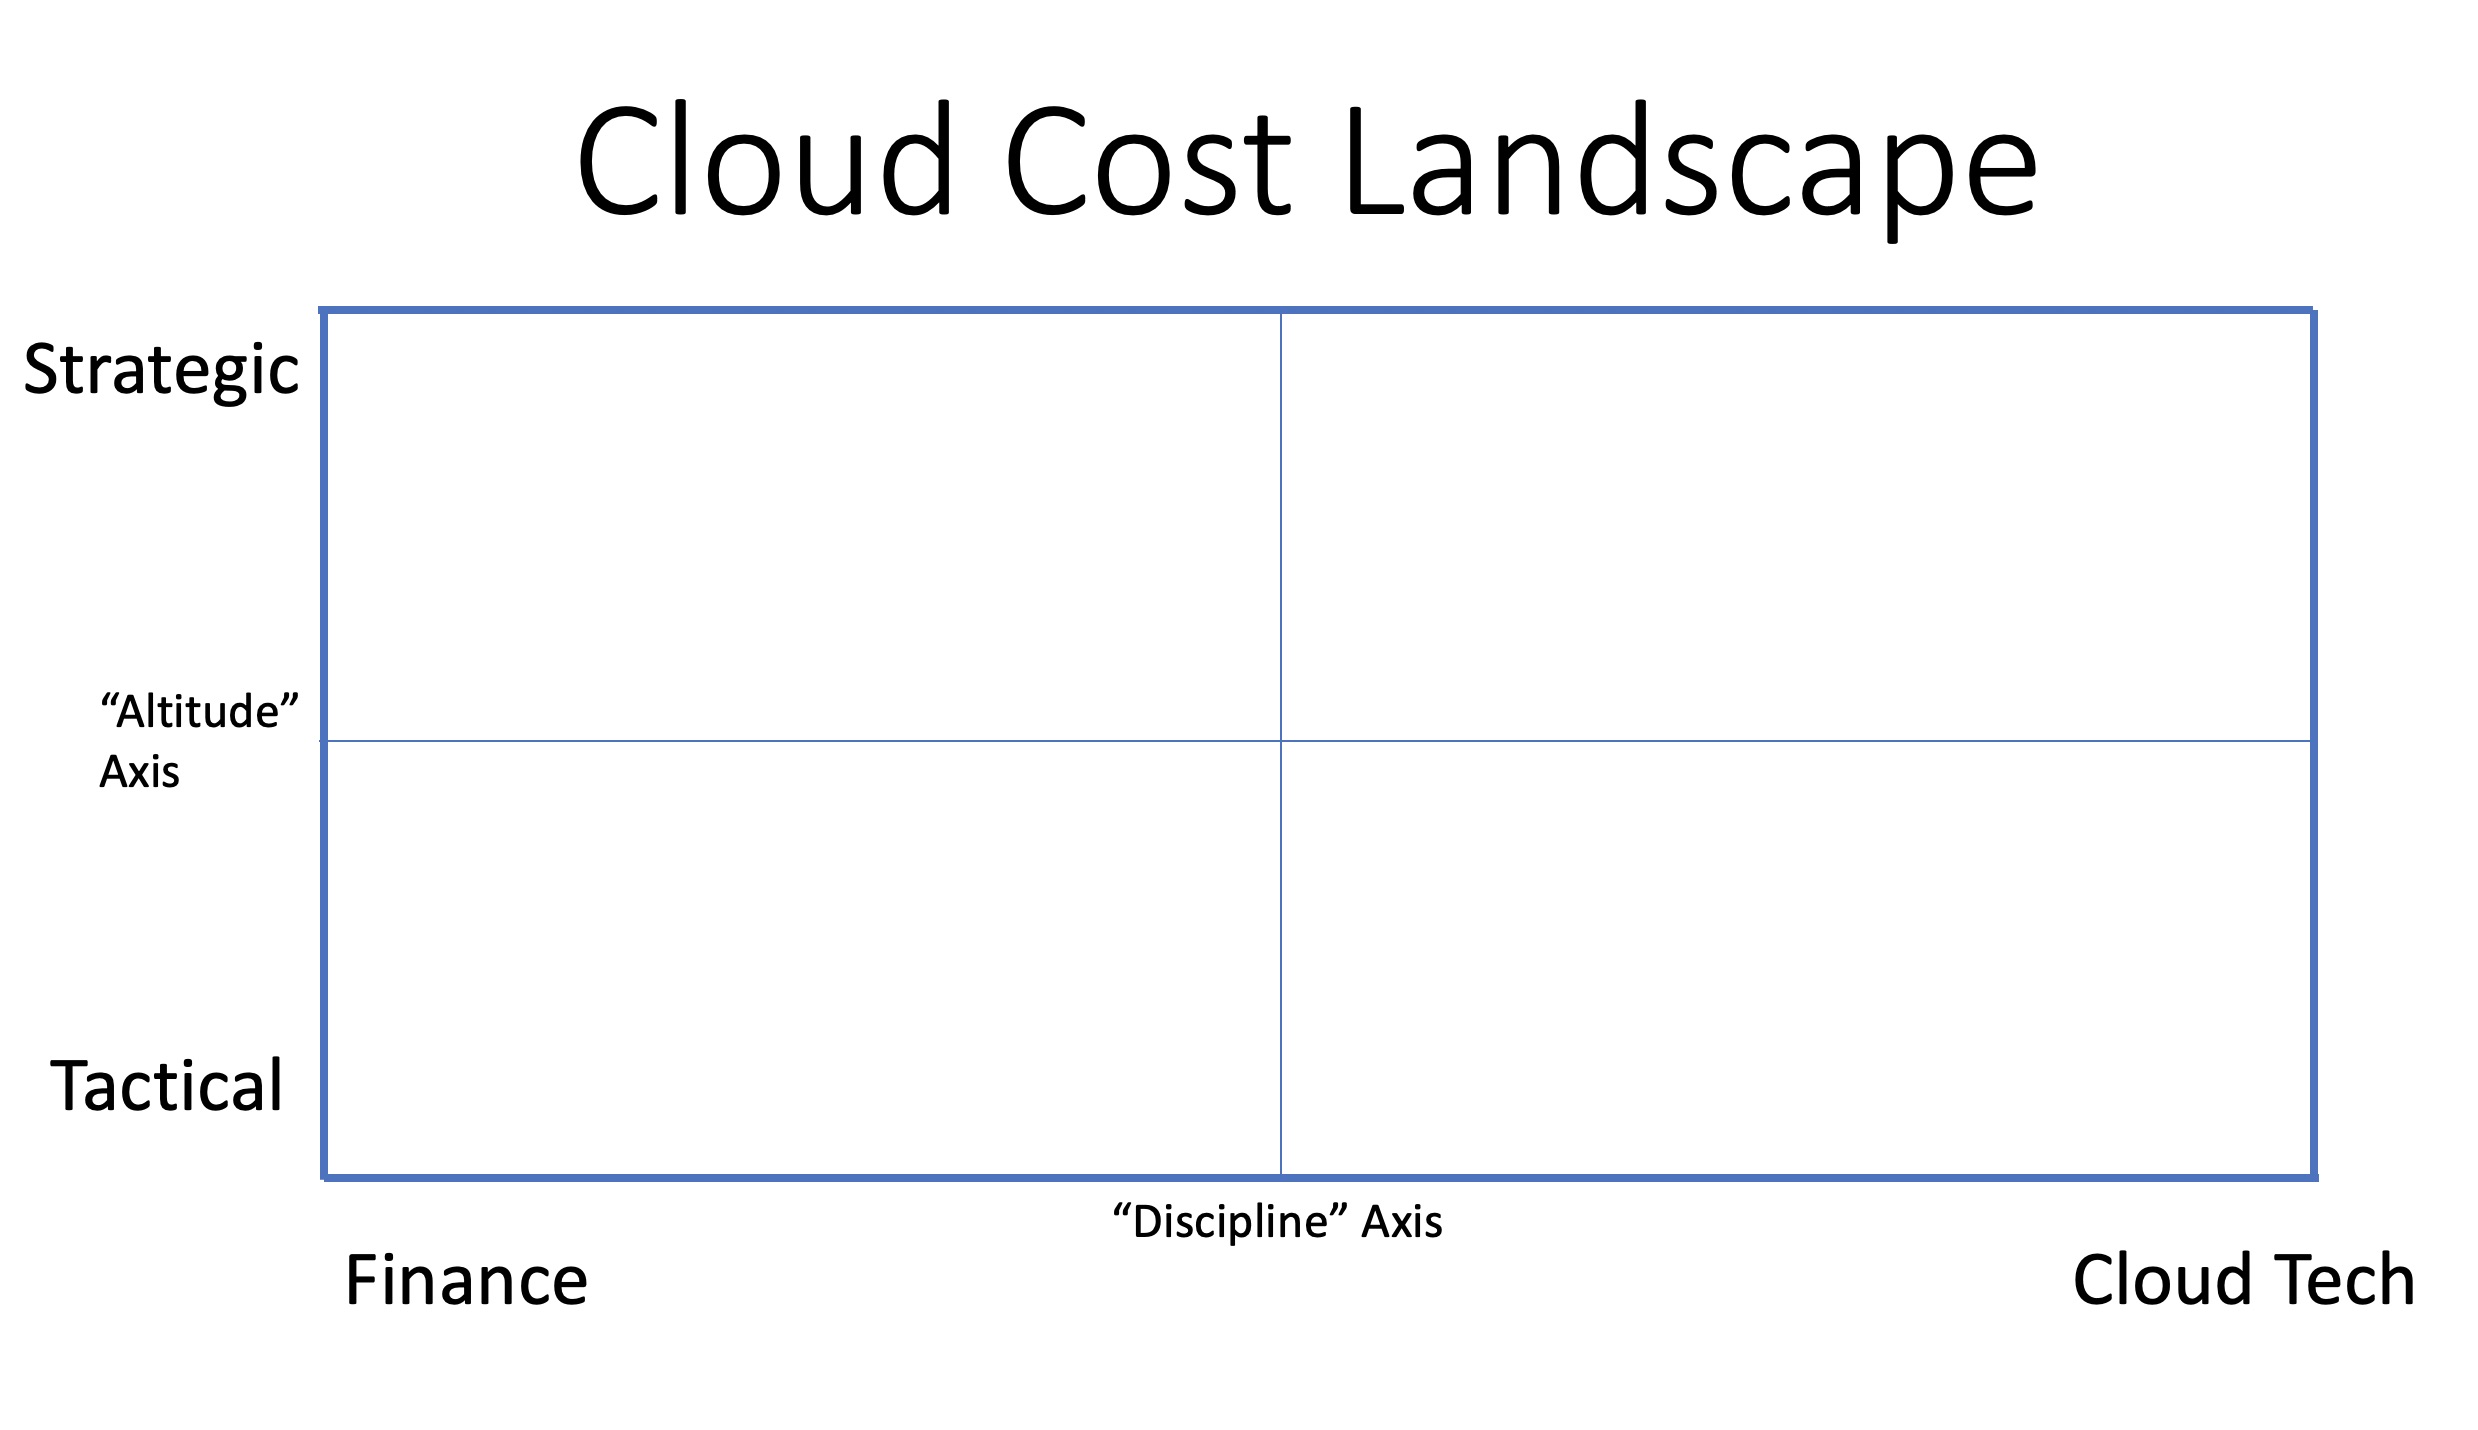 Cloud cost management landscape - people and problems